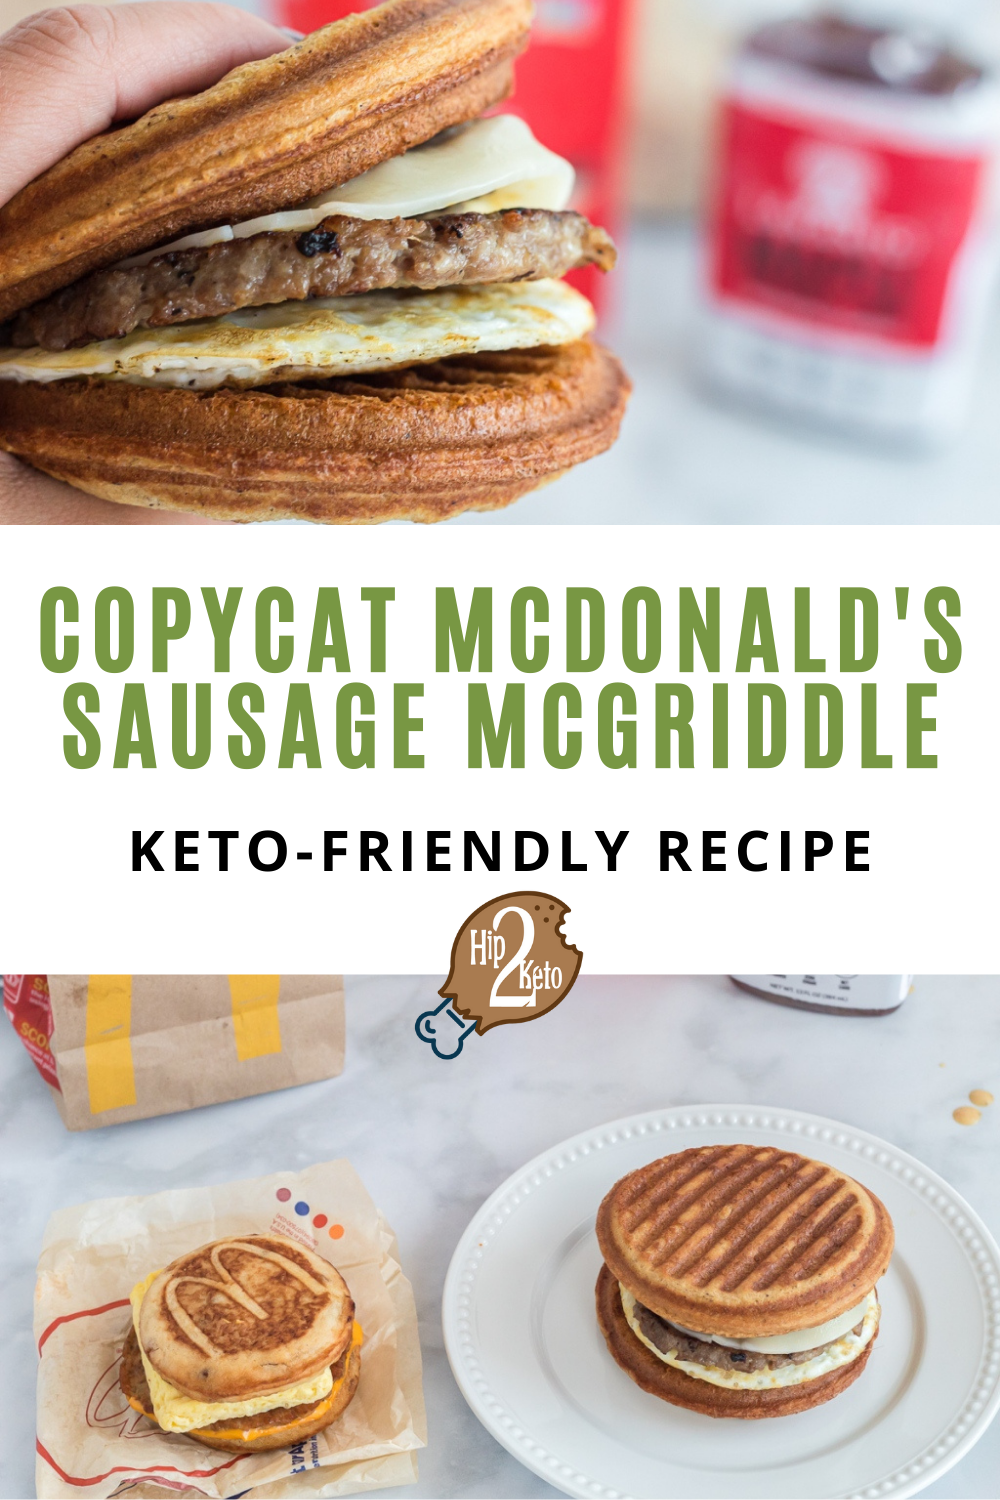 Copy Cat Sausage McGriddle Recipe - Jordo's World